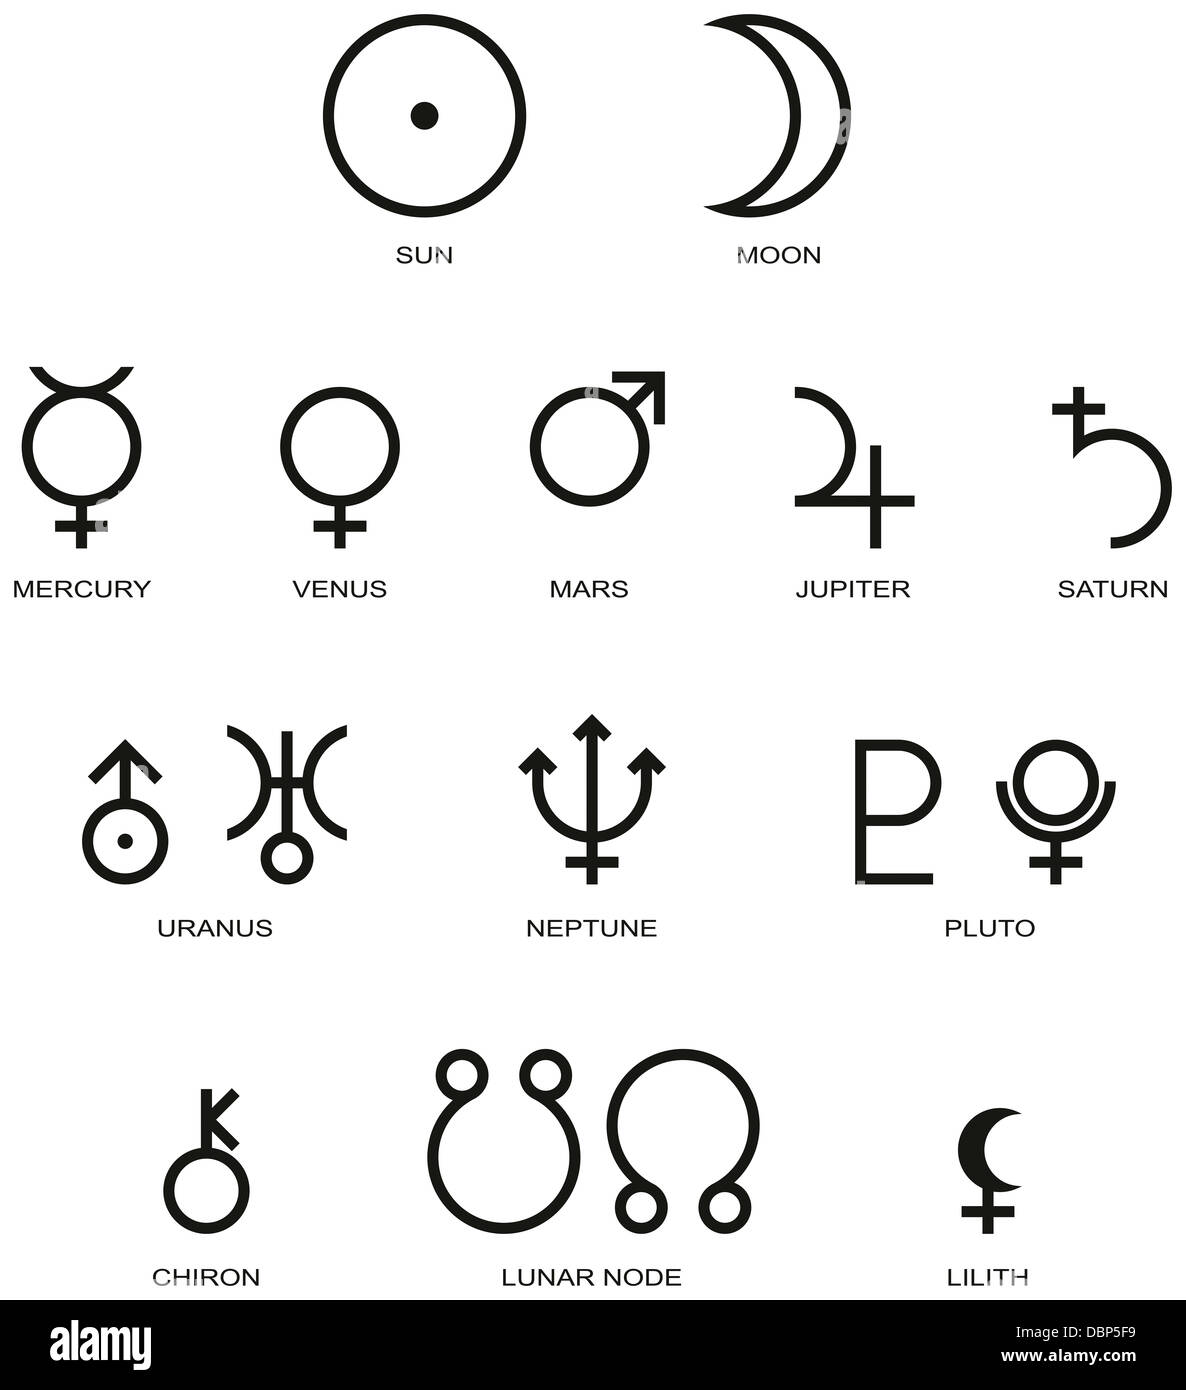 Astrology Planet Symbols Stock Photo